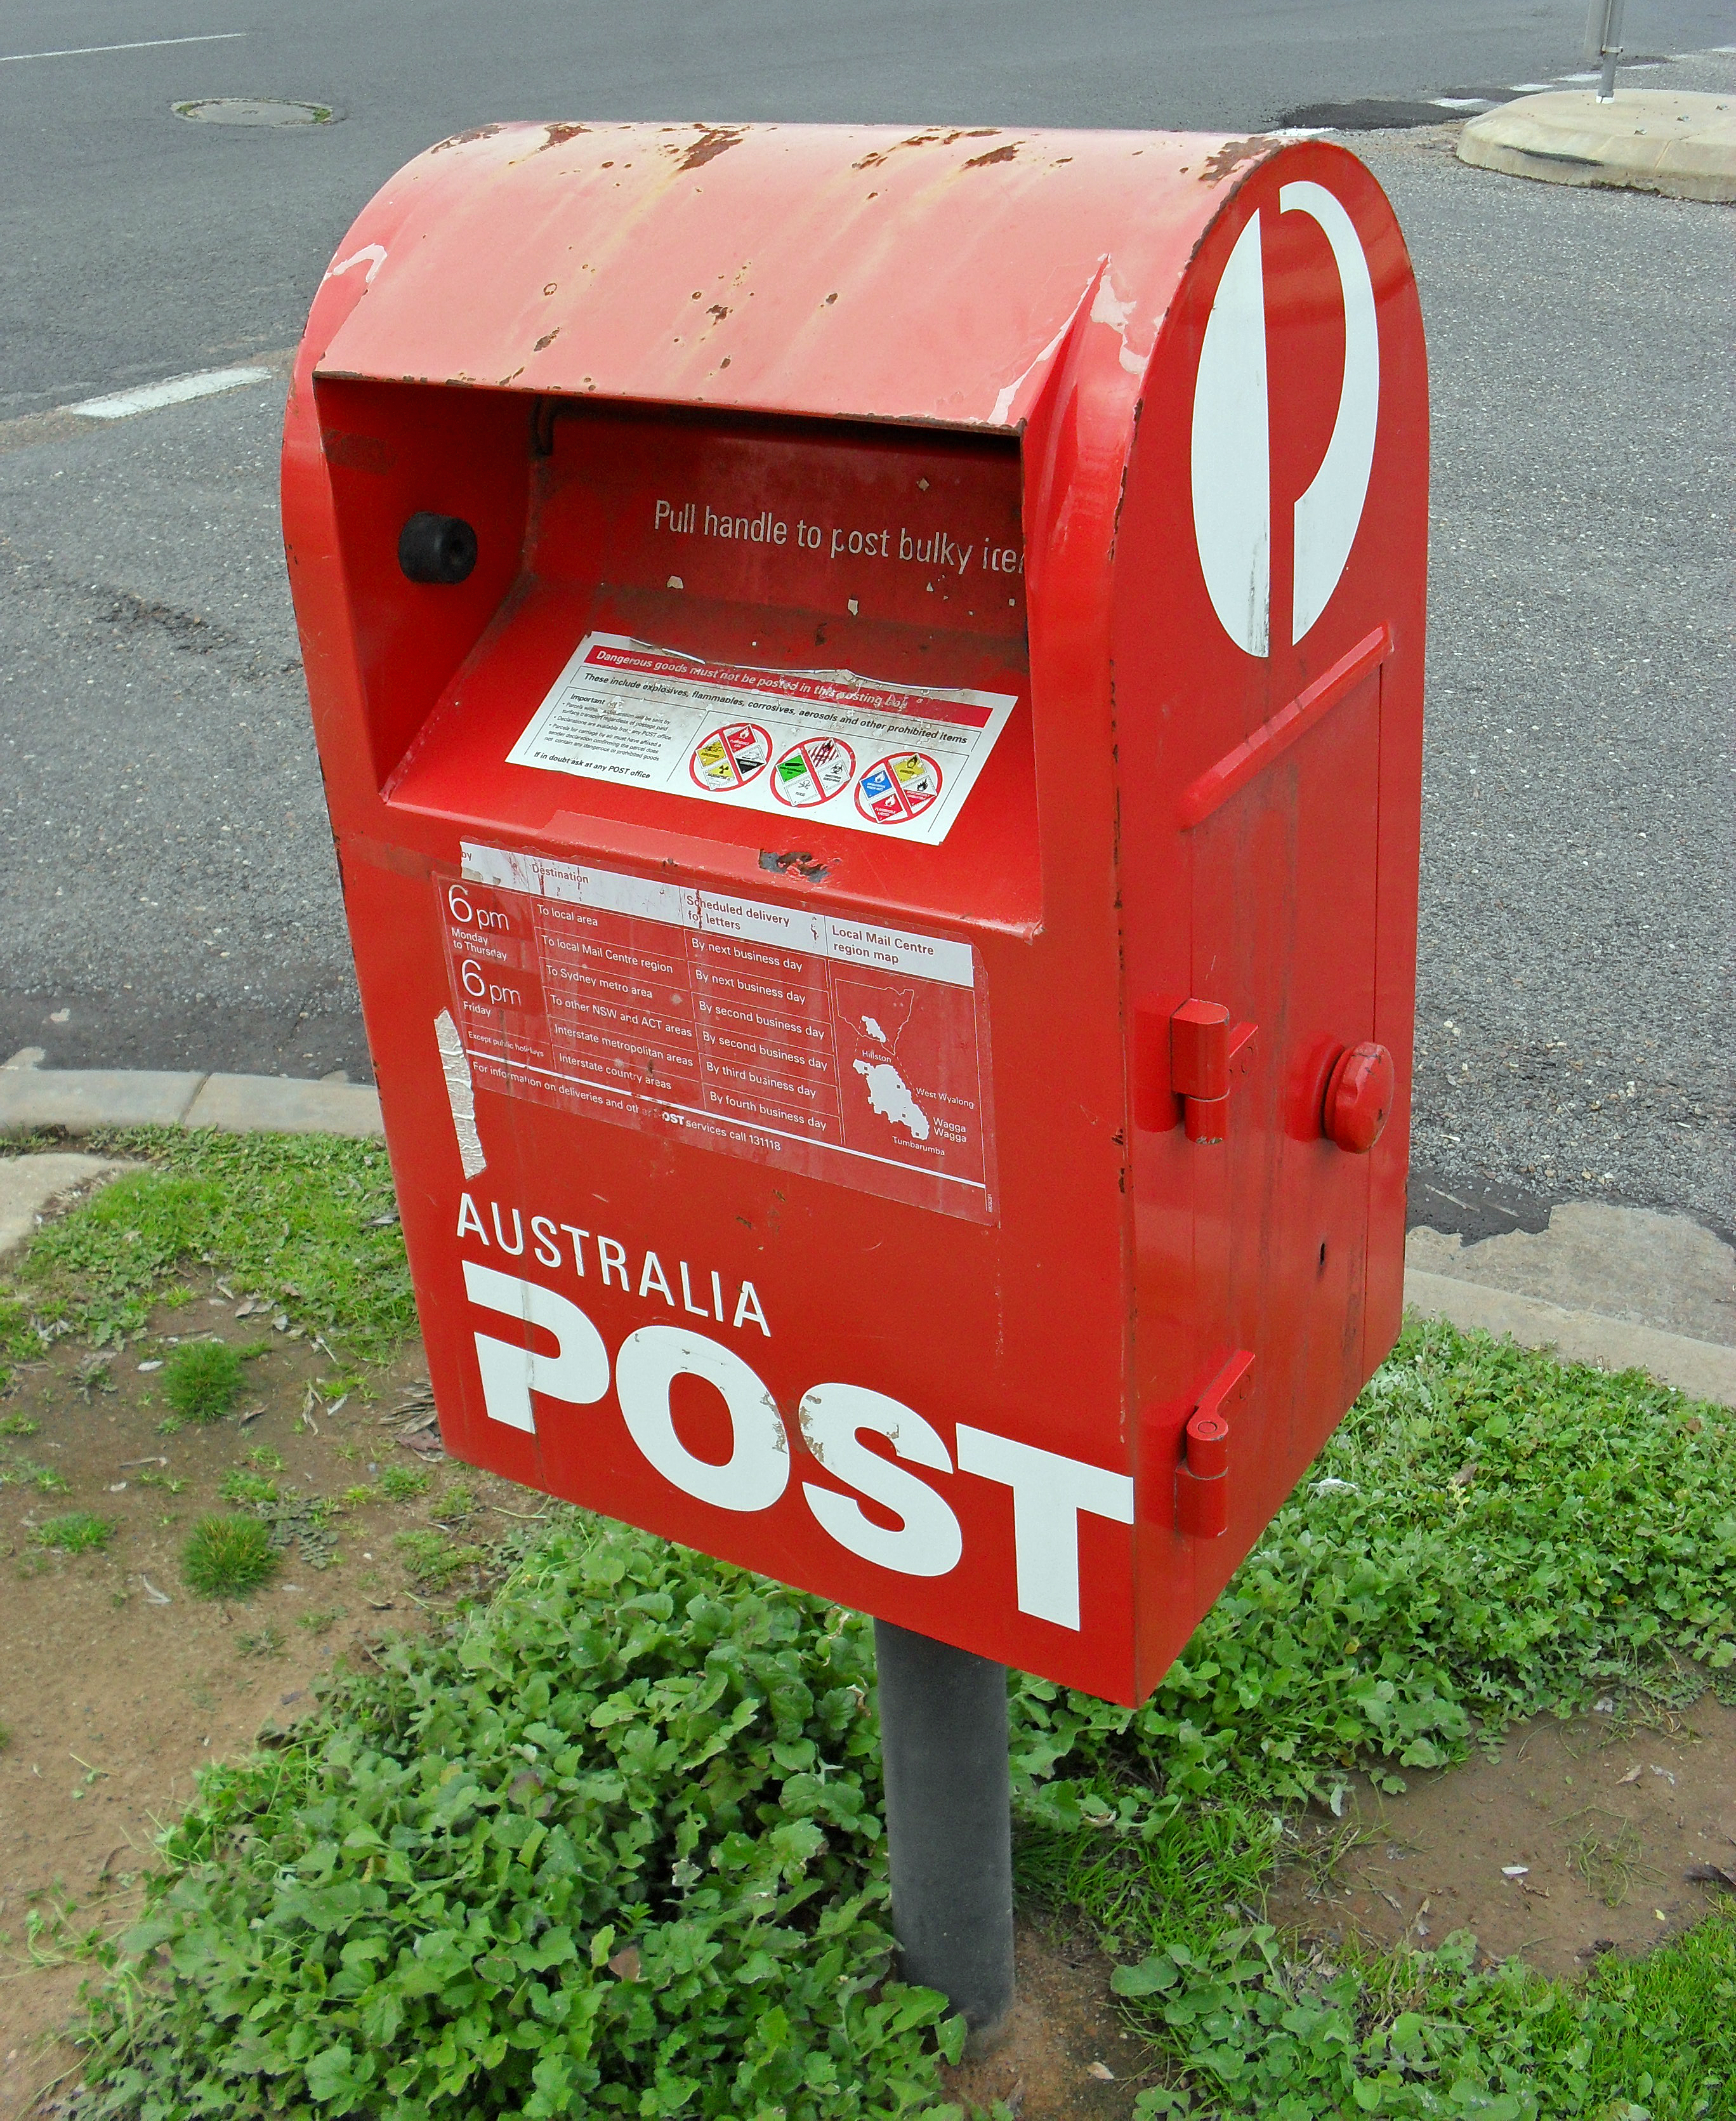 File:Australia Post box.jpg - Wikimedia Commons